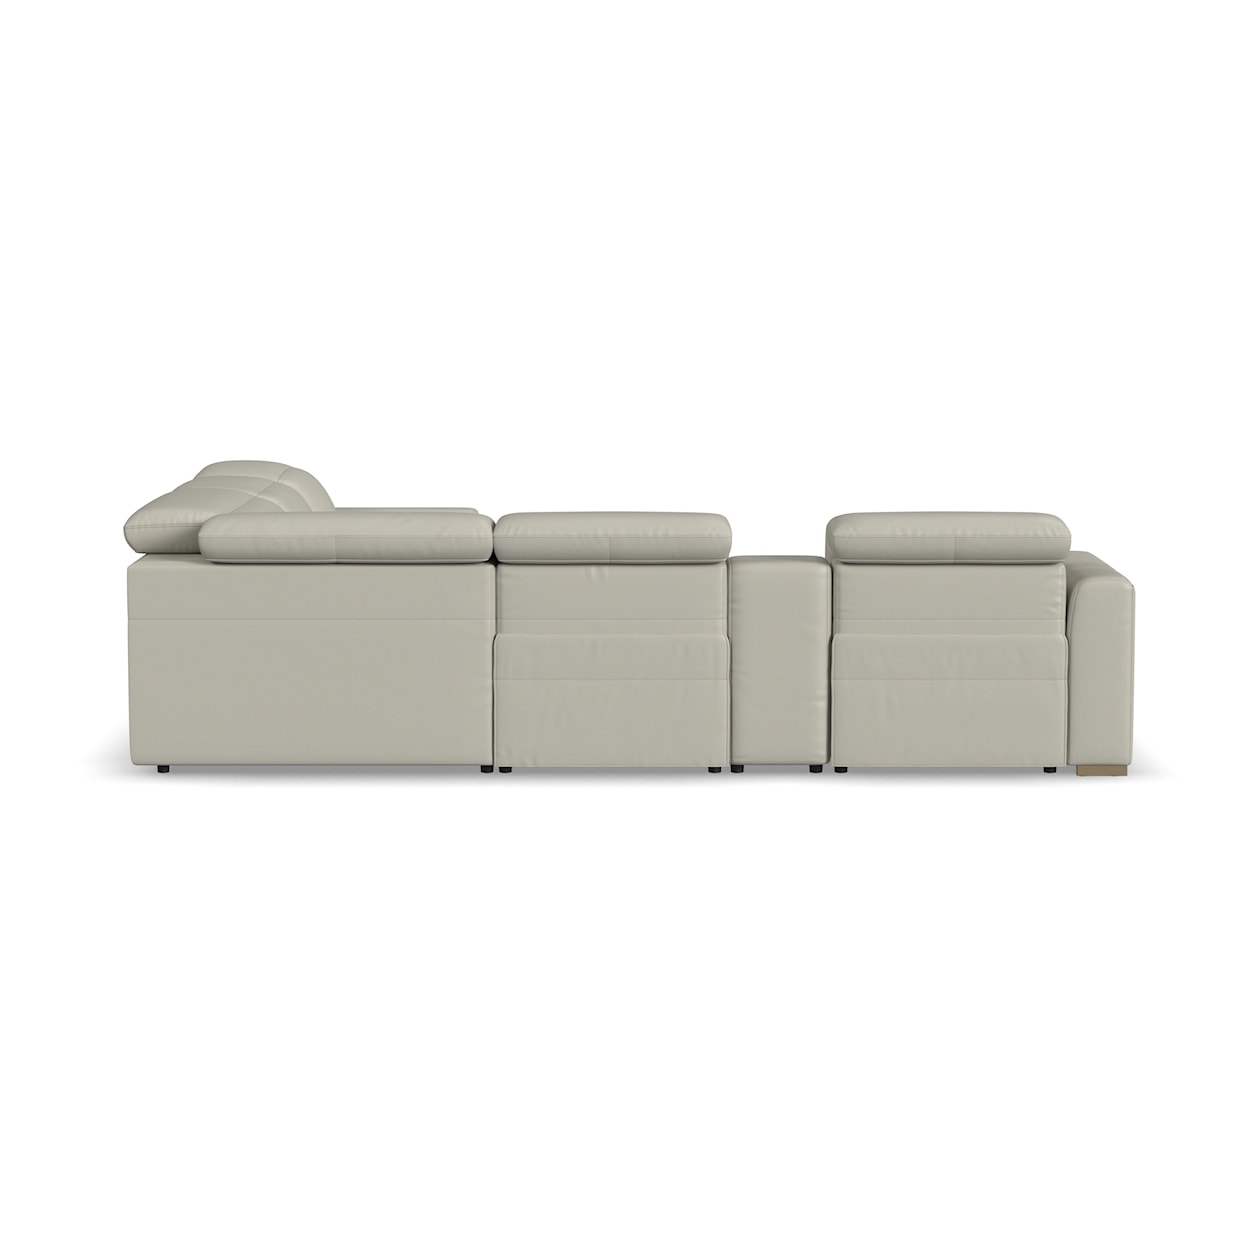 Flexsteel Aurora Sectional Sofa